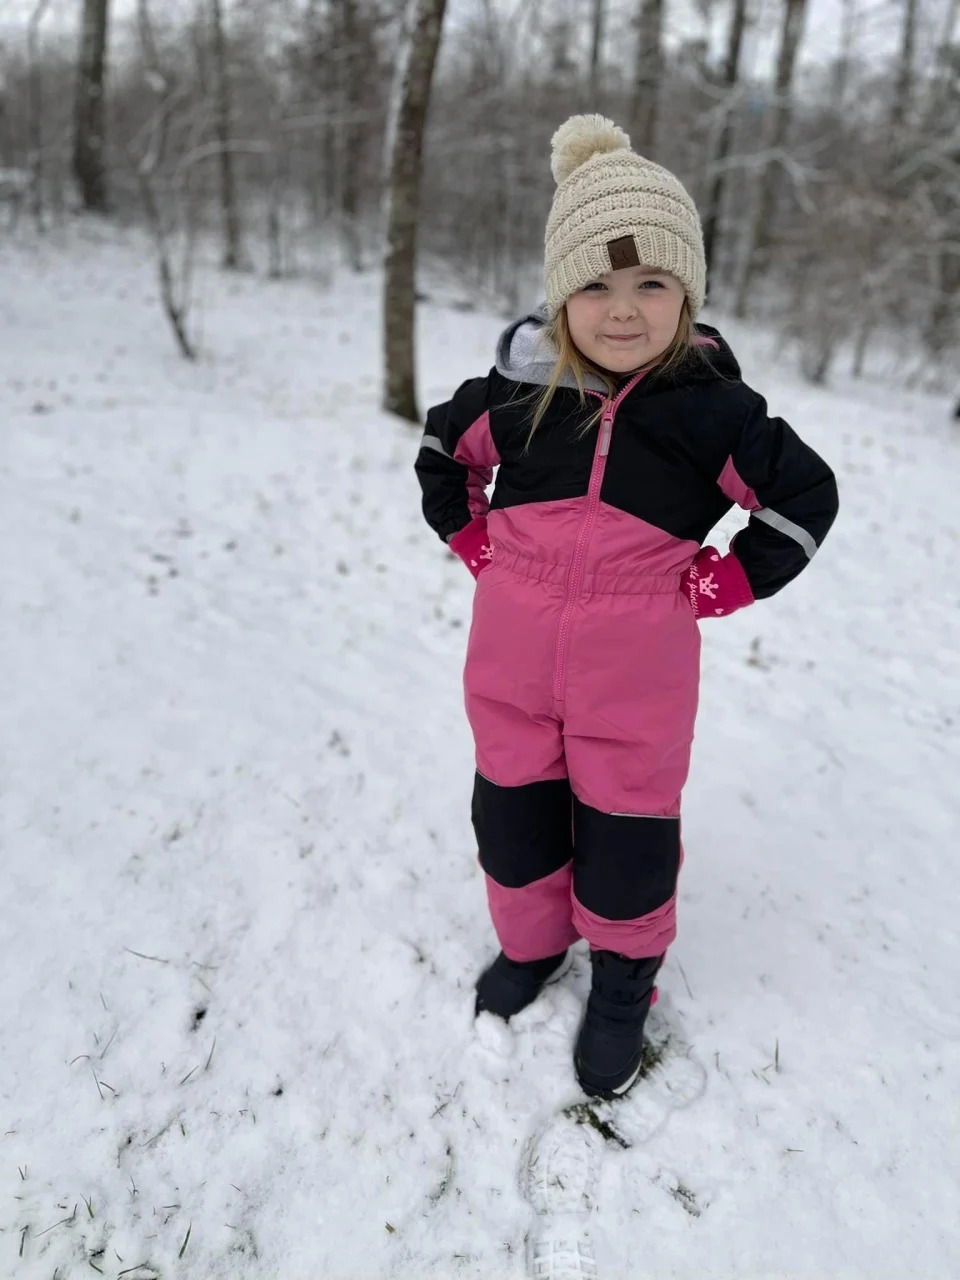 Then 3-year-old Sadie Elliott of Oliver Springs enjoyed the snow on Jan. 6, 2022.